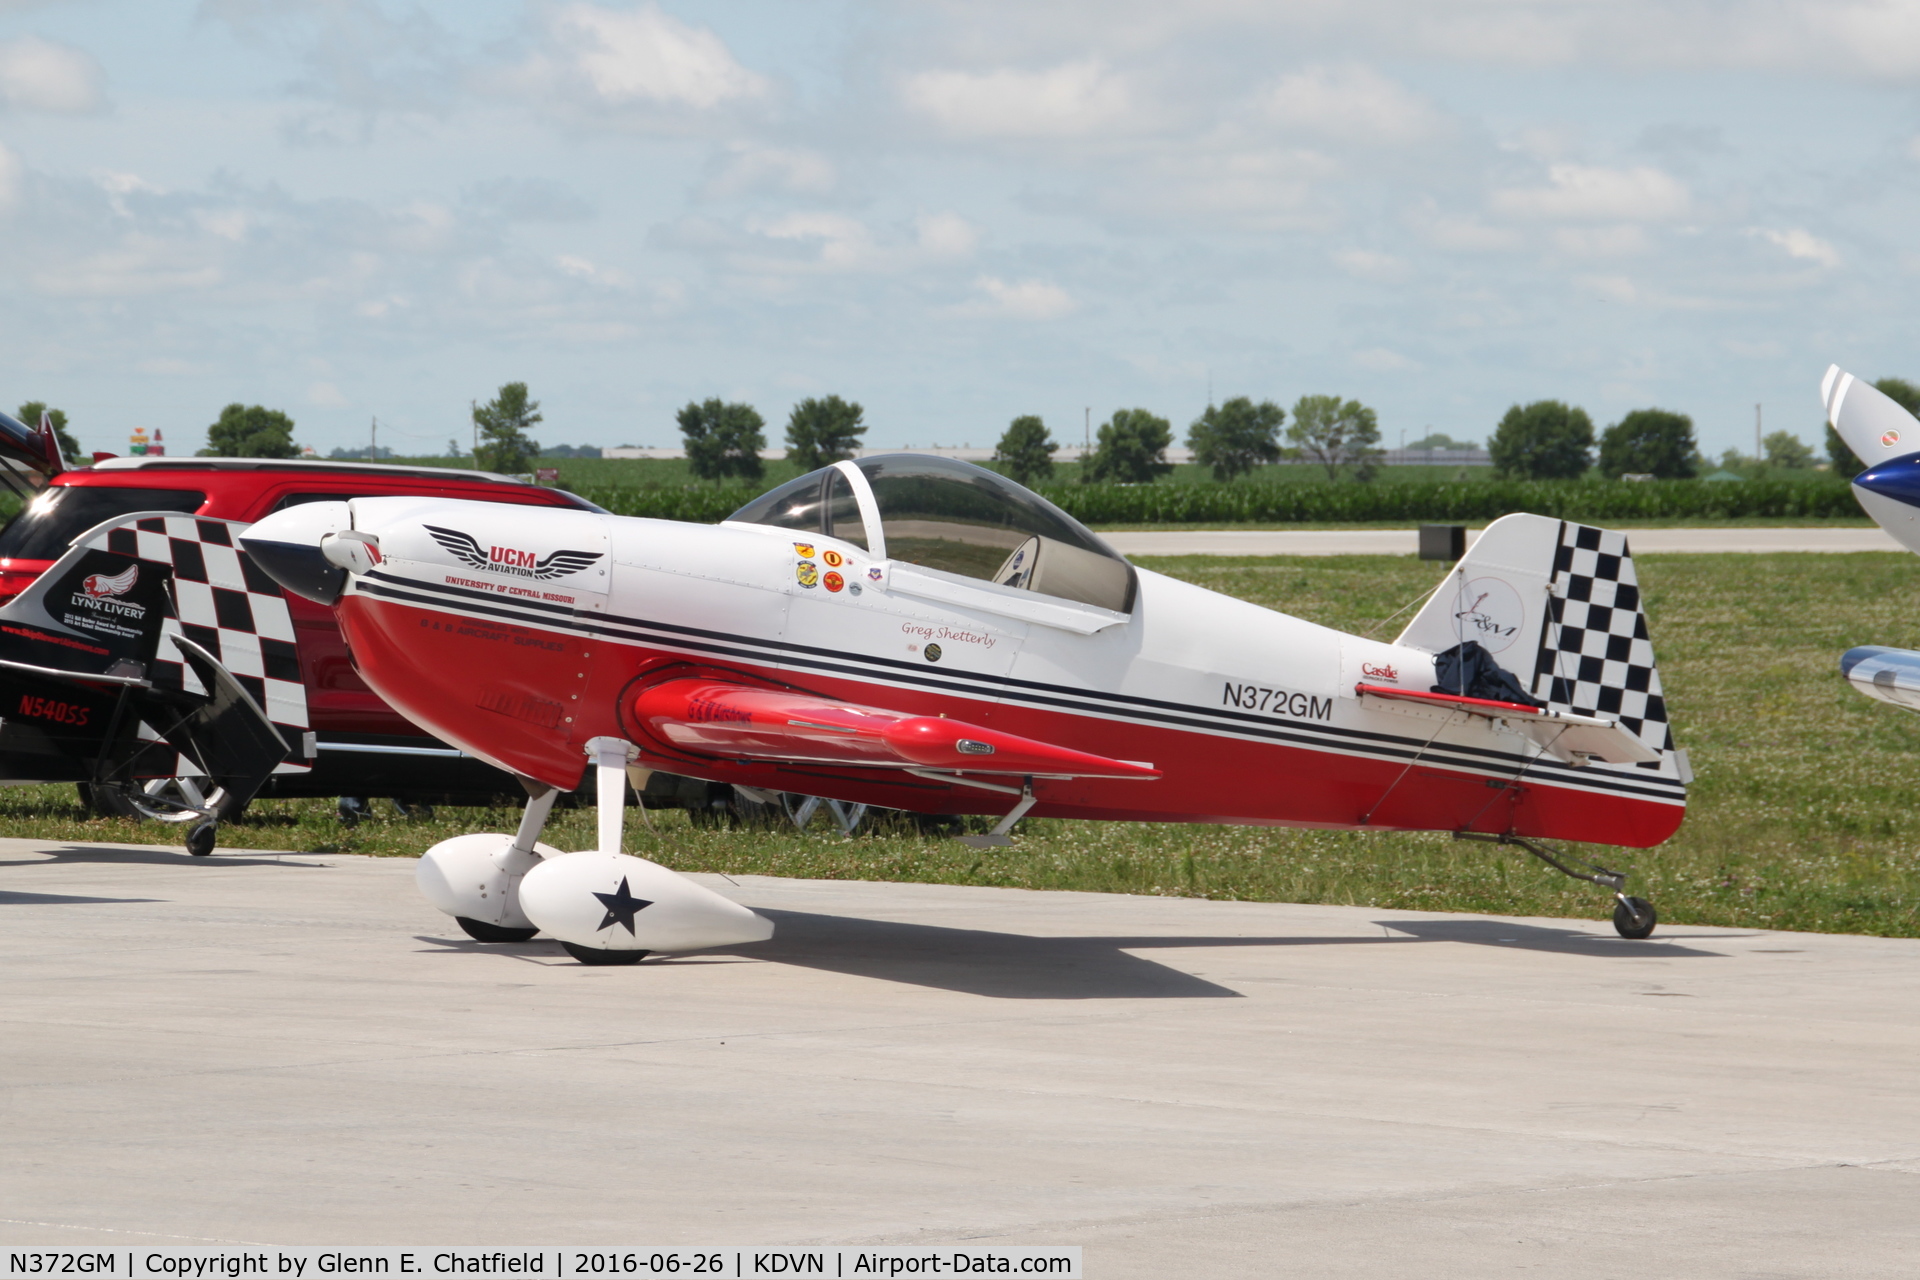 N372GM, Rihn DR-107 One Design C/N 97-0396, At the Quad Cities Air Show